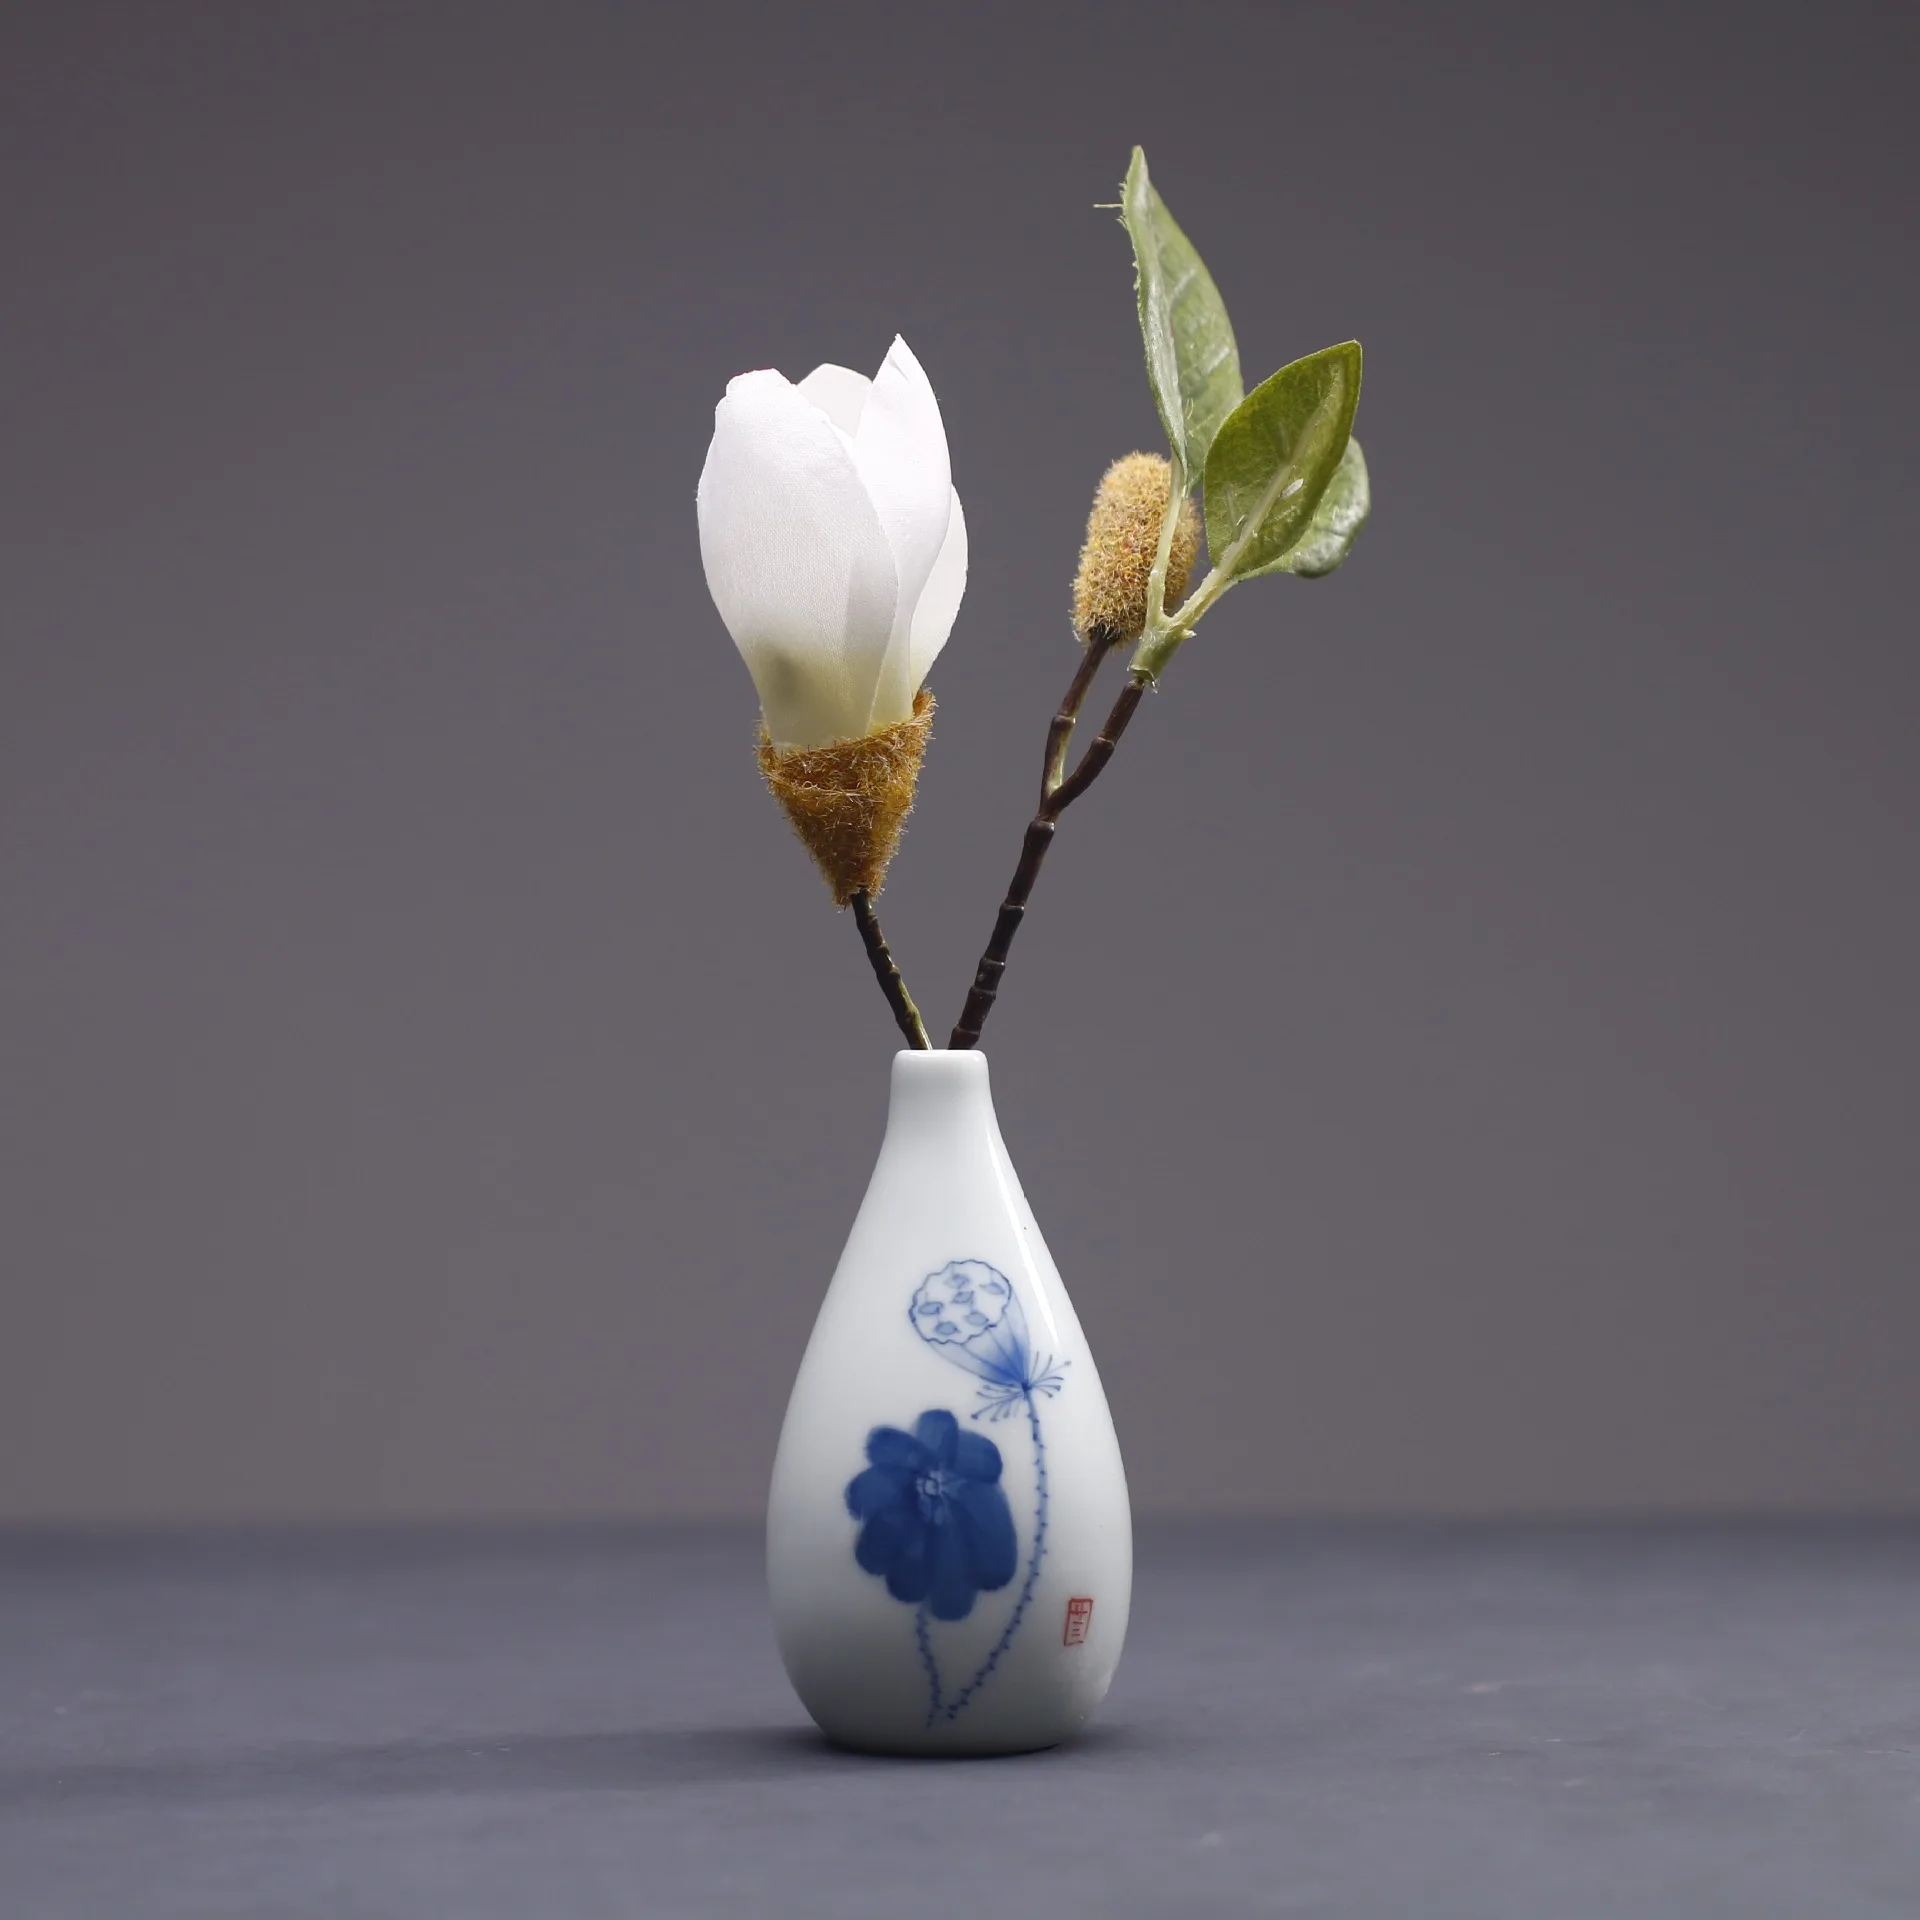 Creative Household Ornaments White Porcelain Hydroponic Flower Vessel Arrangement Mini Vase Hand Painted Ceramic Room Decor Home 4